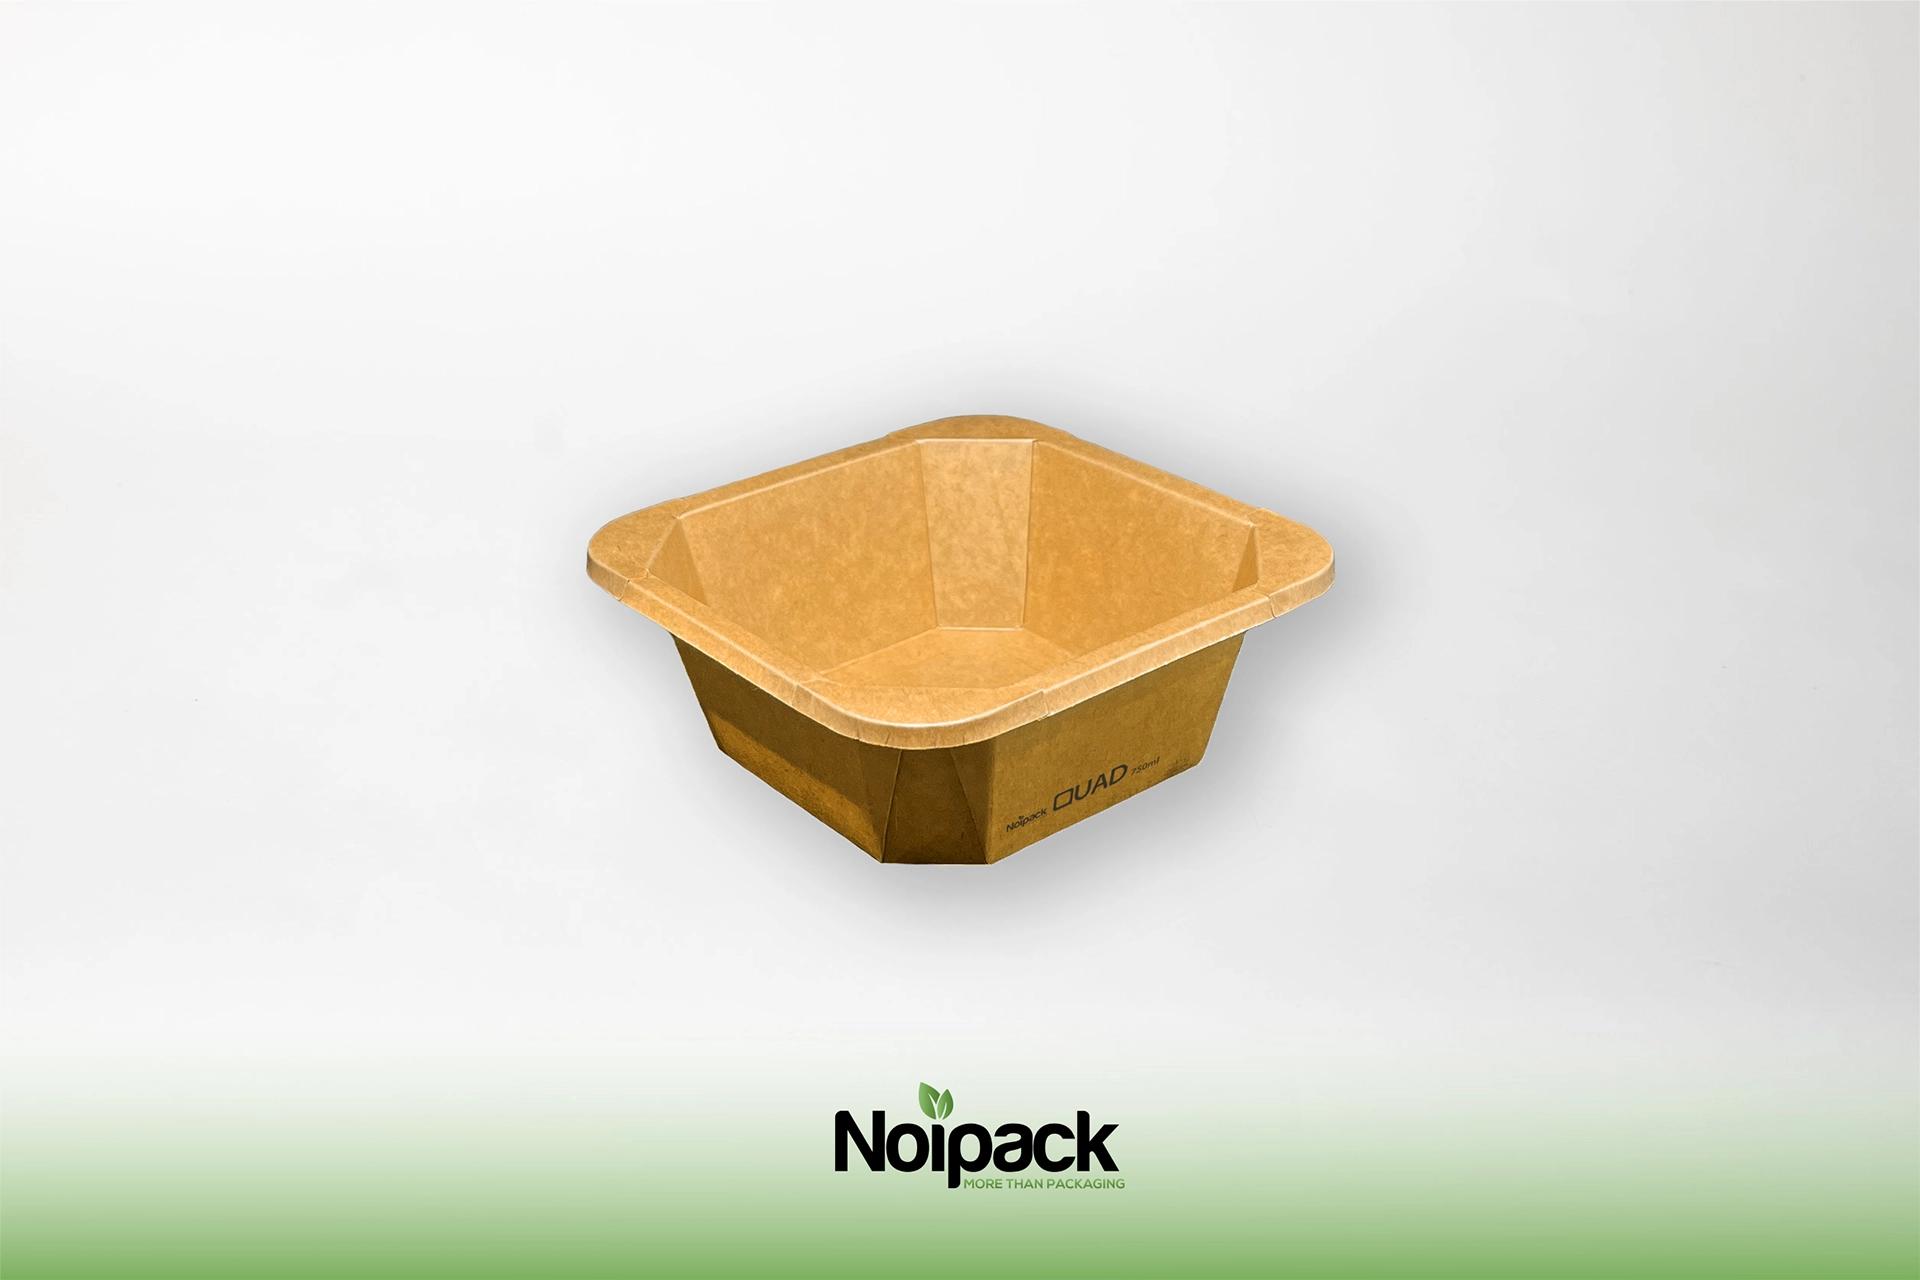 Noipack carton square bowl QUAD 750ml